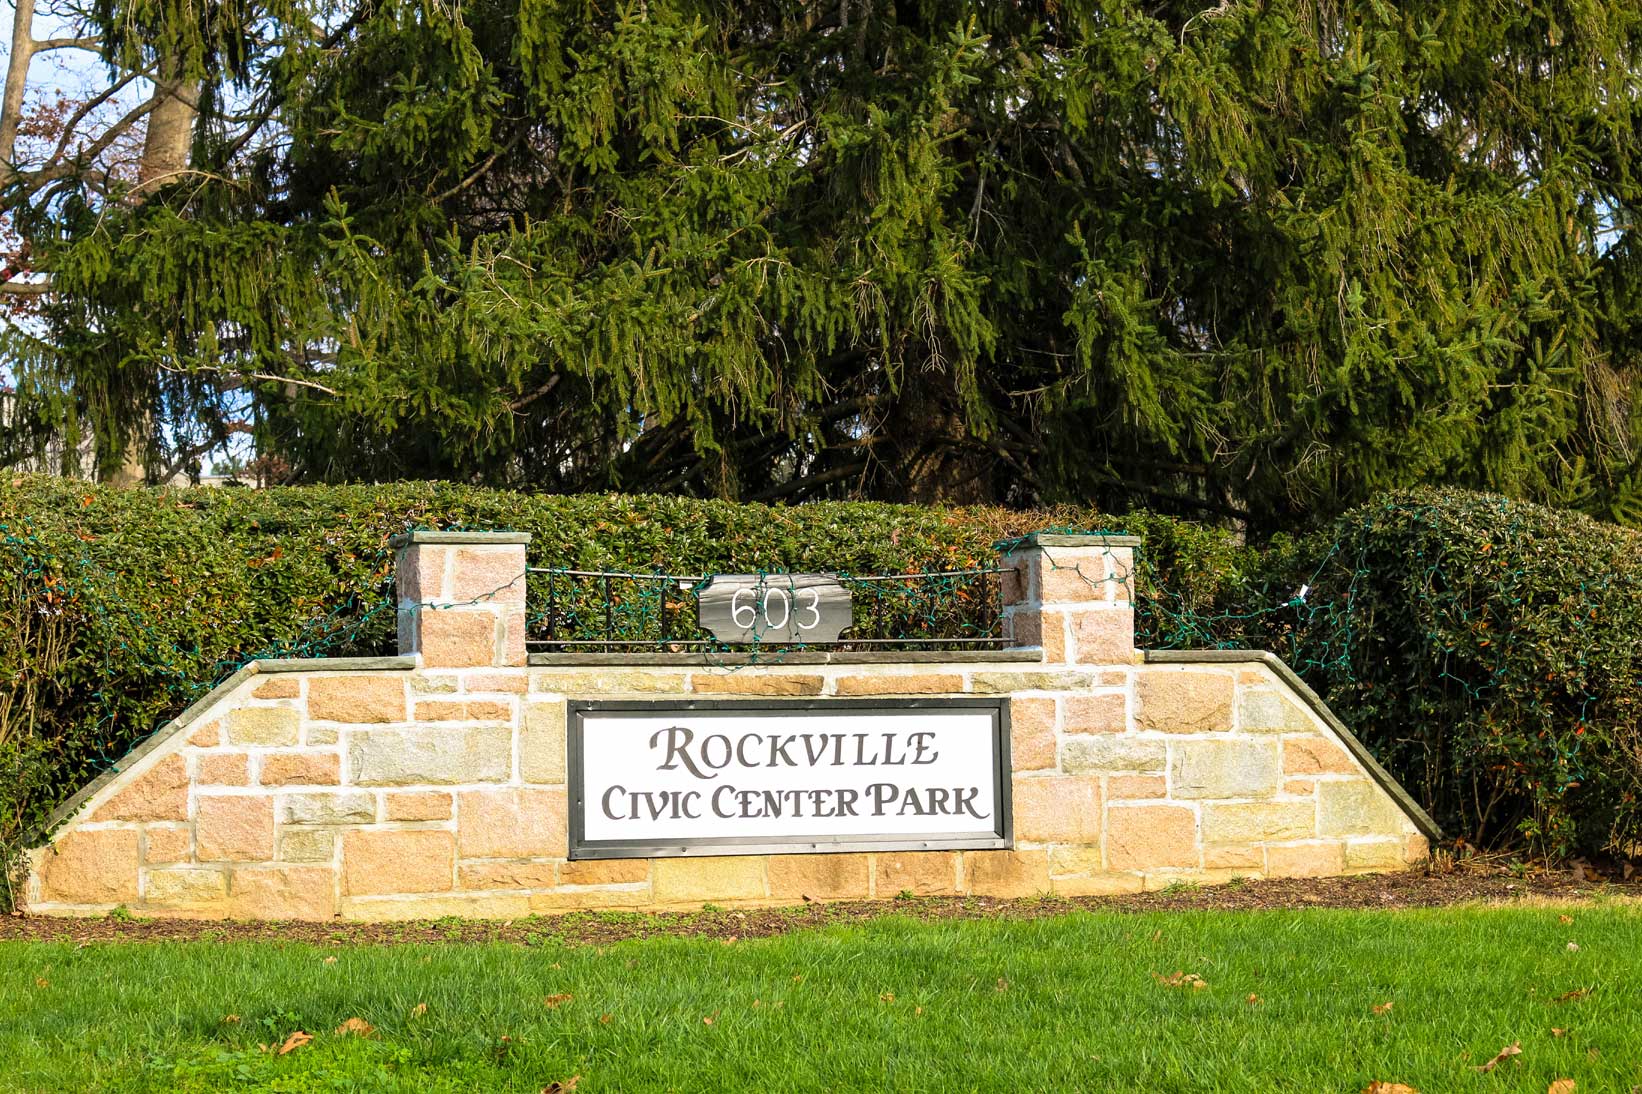 Rockville Civic Center Park in Rockville, MD